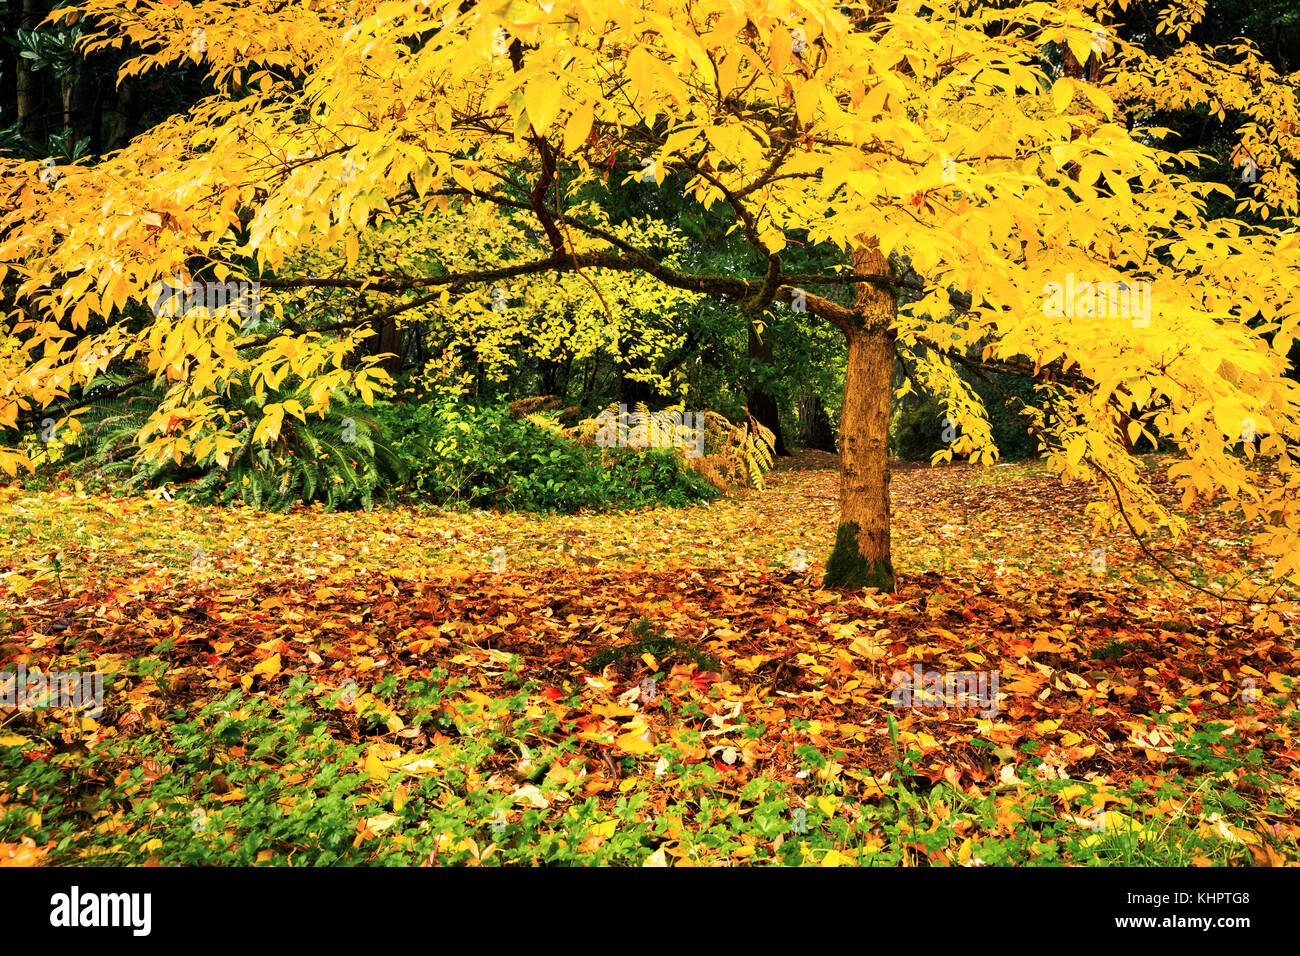 Albero con giallo caduta delle foglie in Seattle Washington Park Arboretum giardino botanico Foto Stock